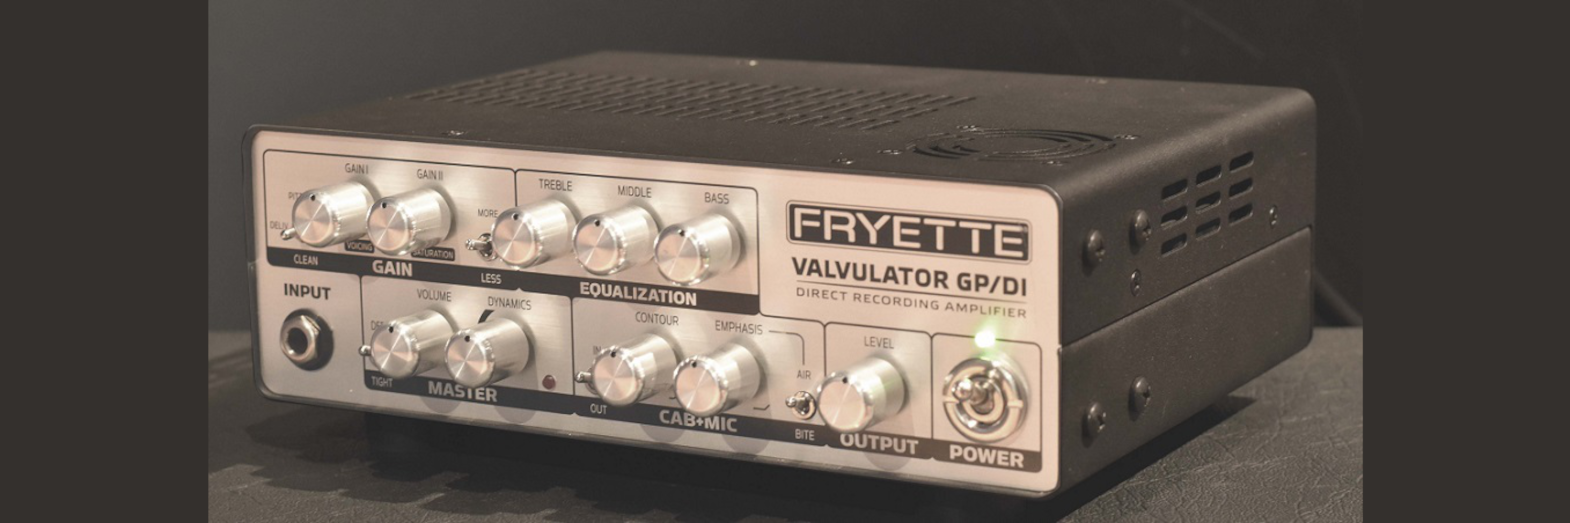 Fryette – Valvulator GP/DI